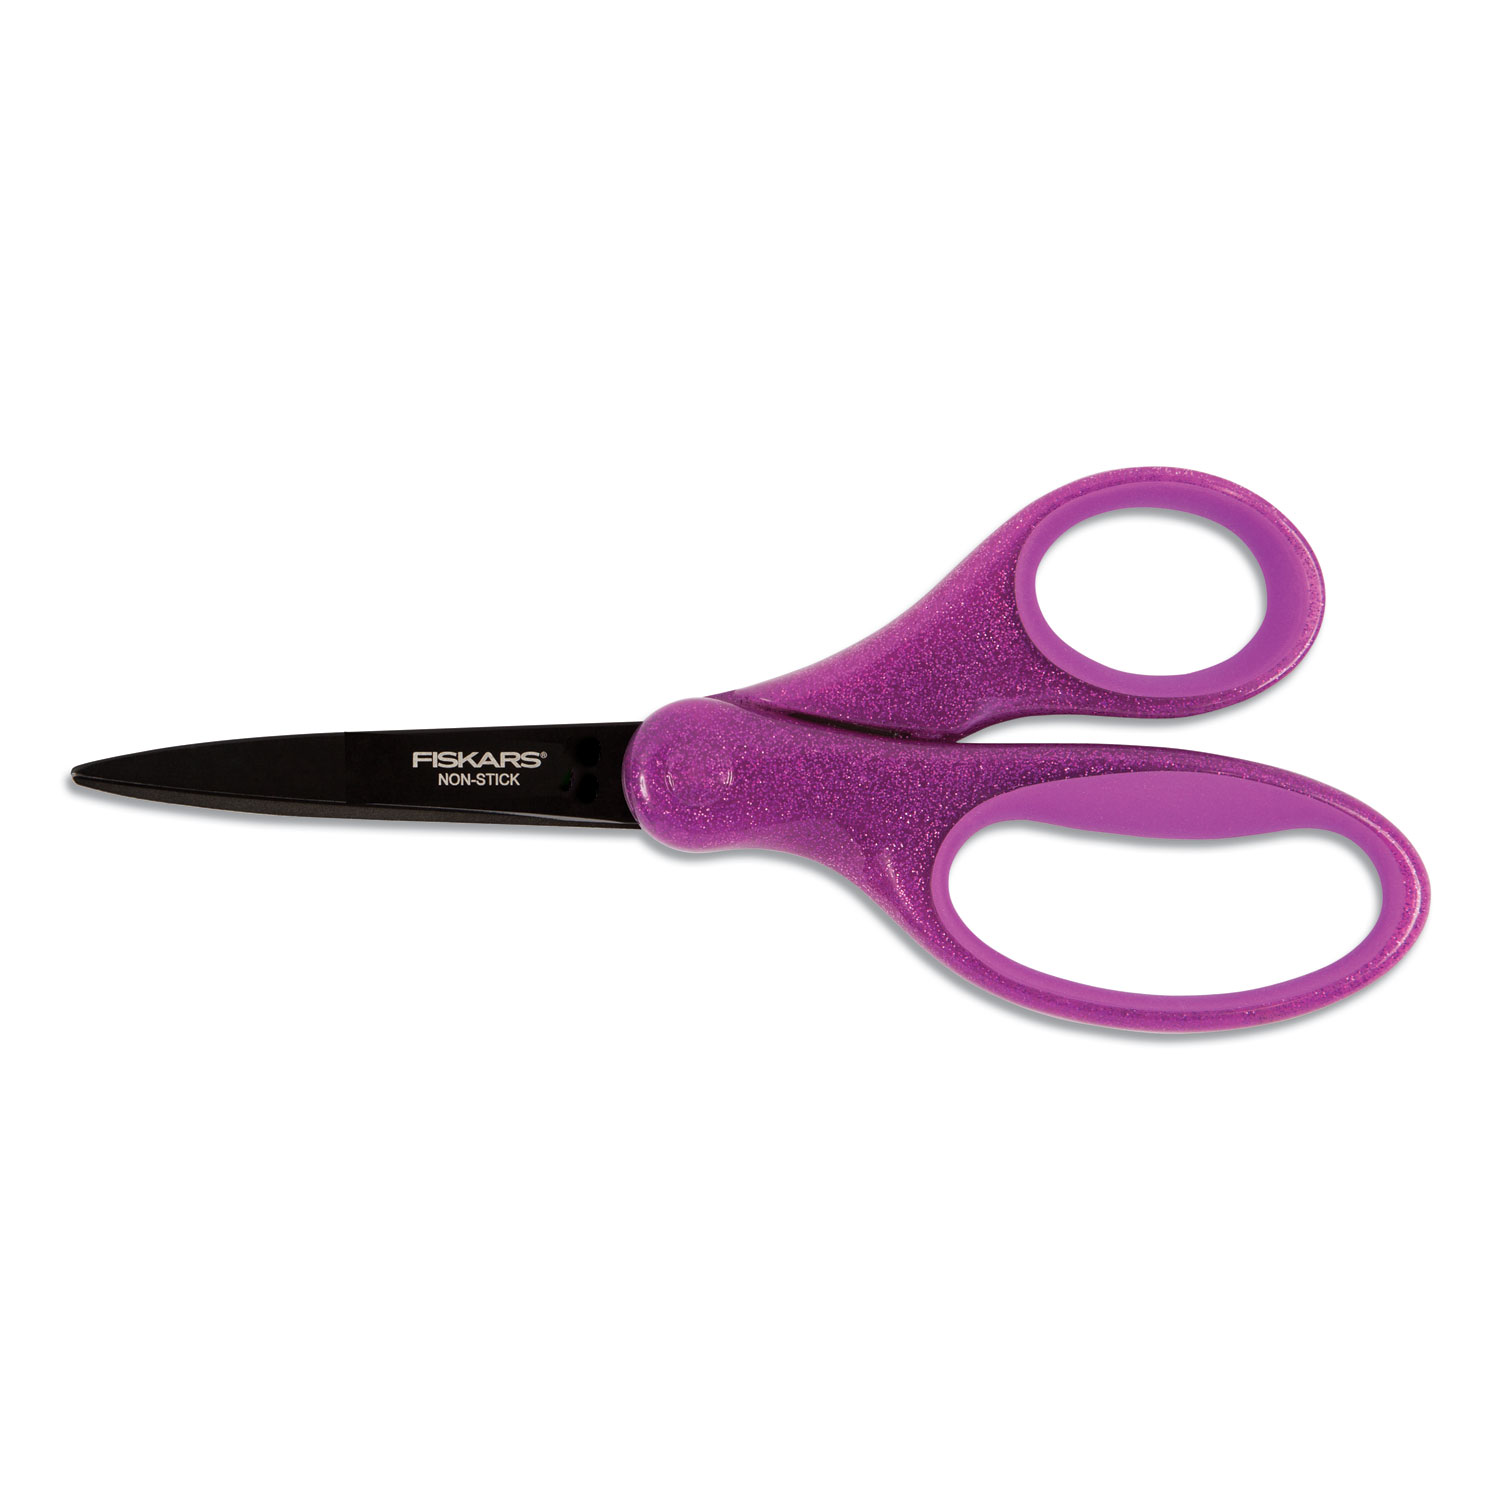  Fiskars 134582-1001 Student Designer Non-Stick Scissors, Pointed Tip, 7 Long, 2.75 Cut Length, Randomly Assorted Straight Handles (FSK1345821001) 